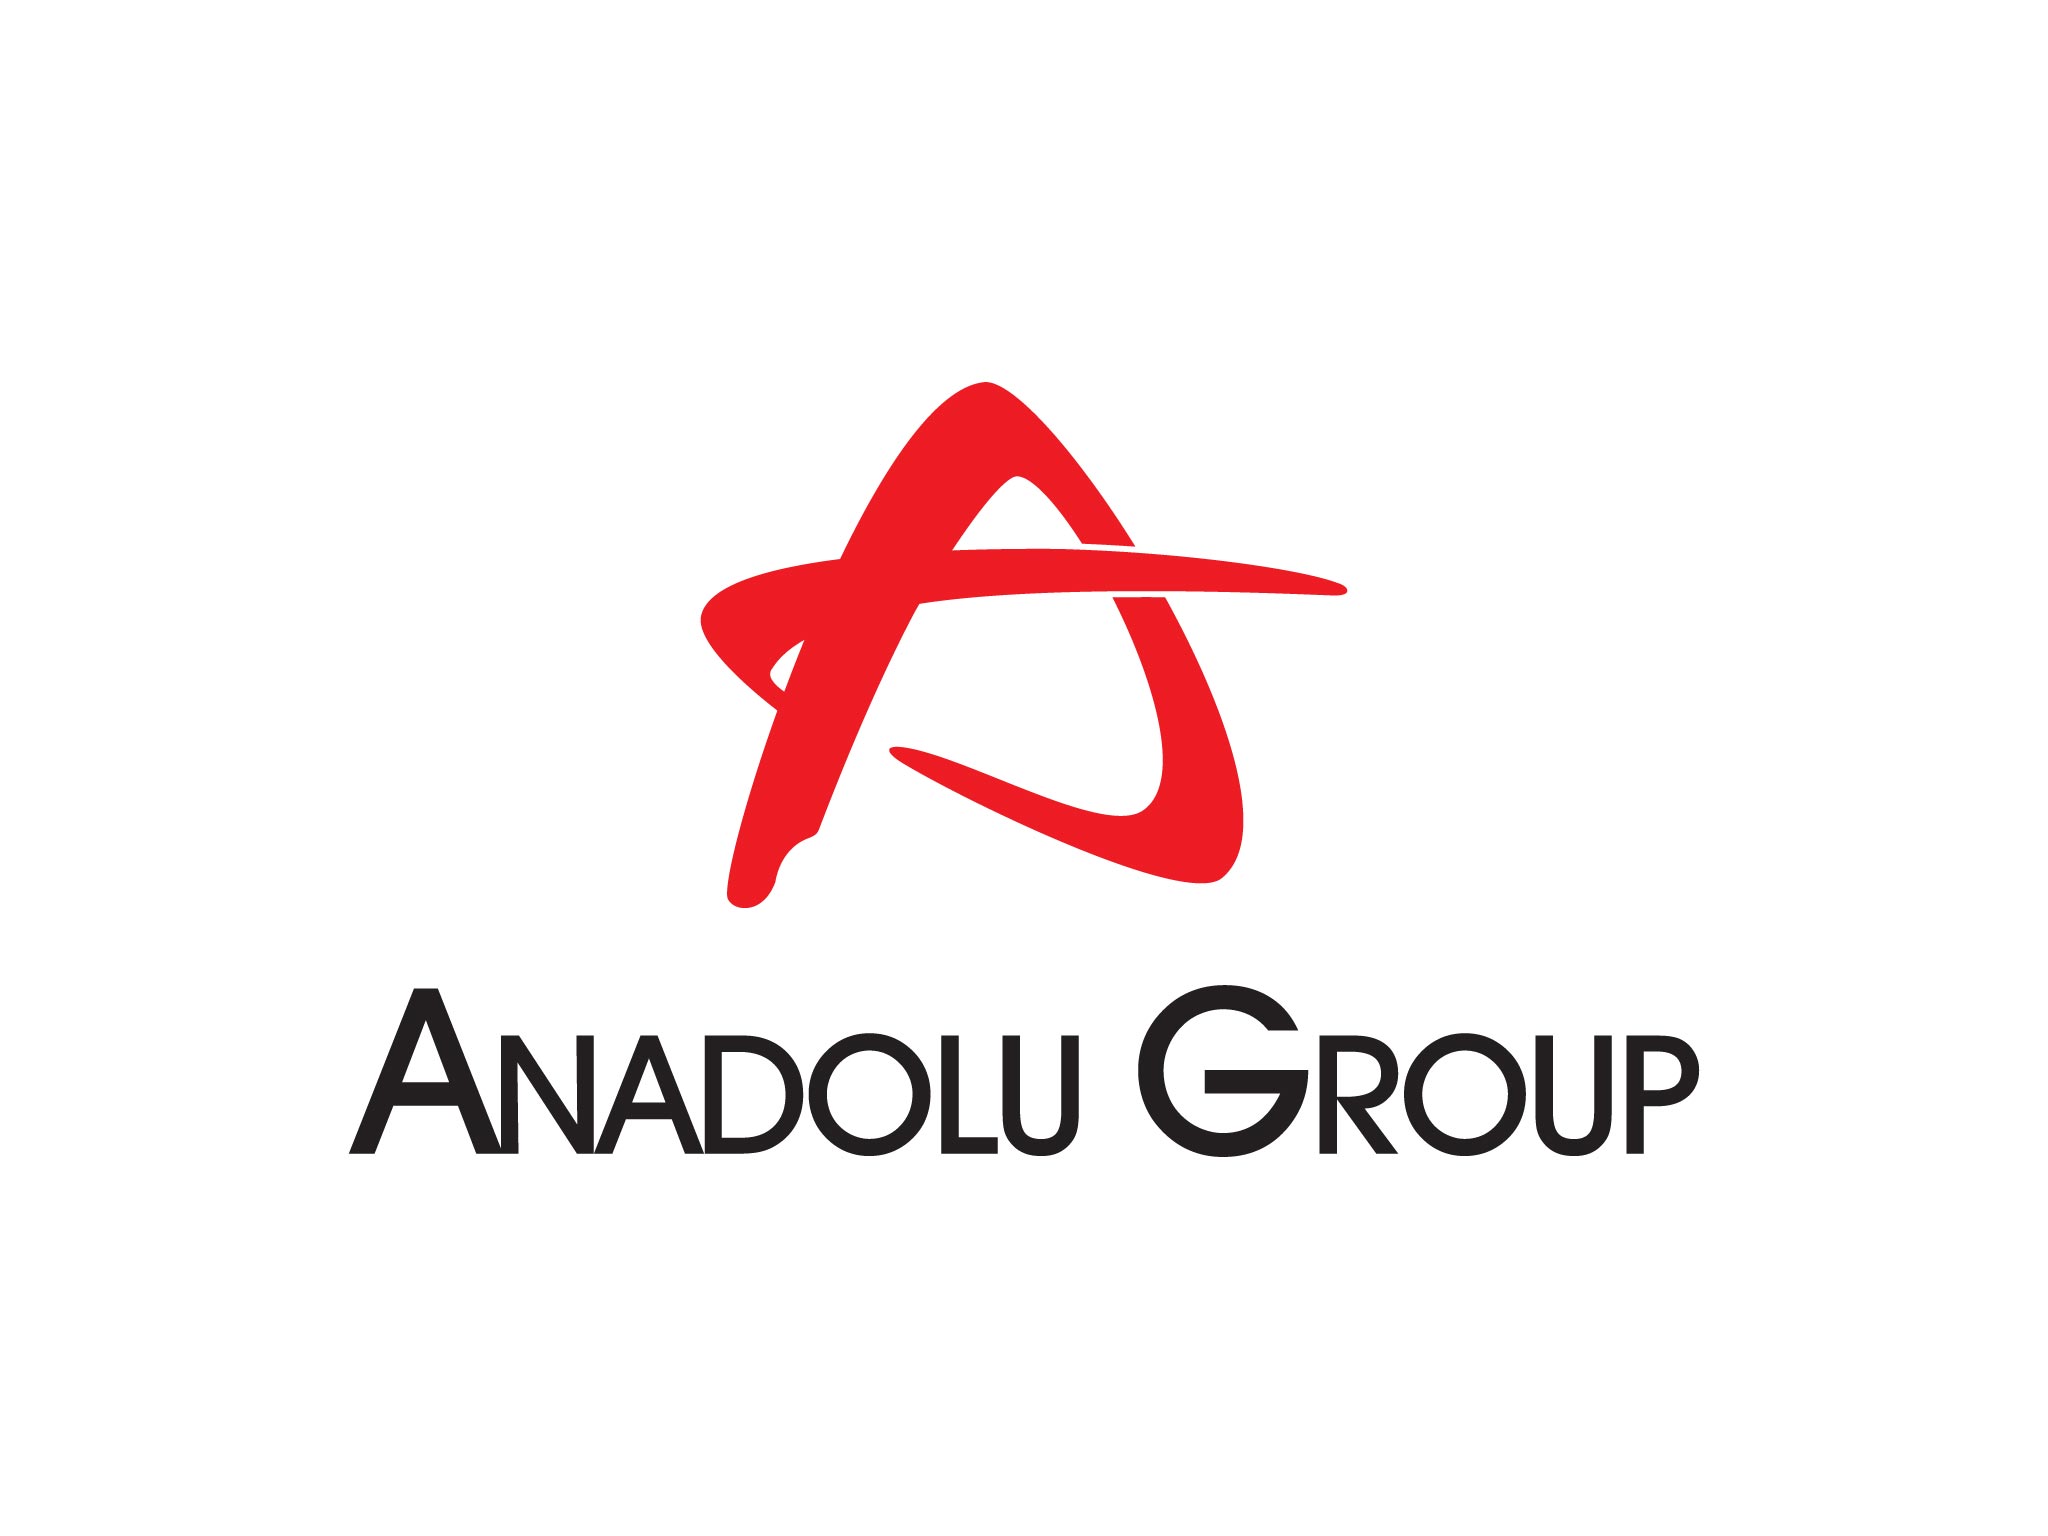 Anadolu Group